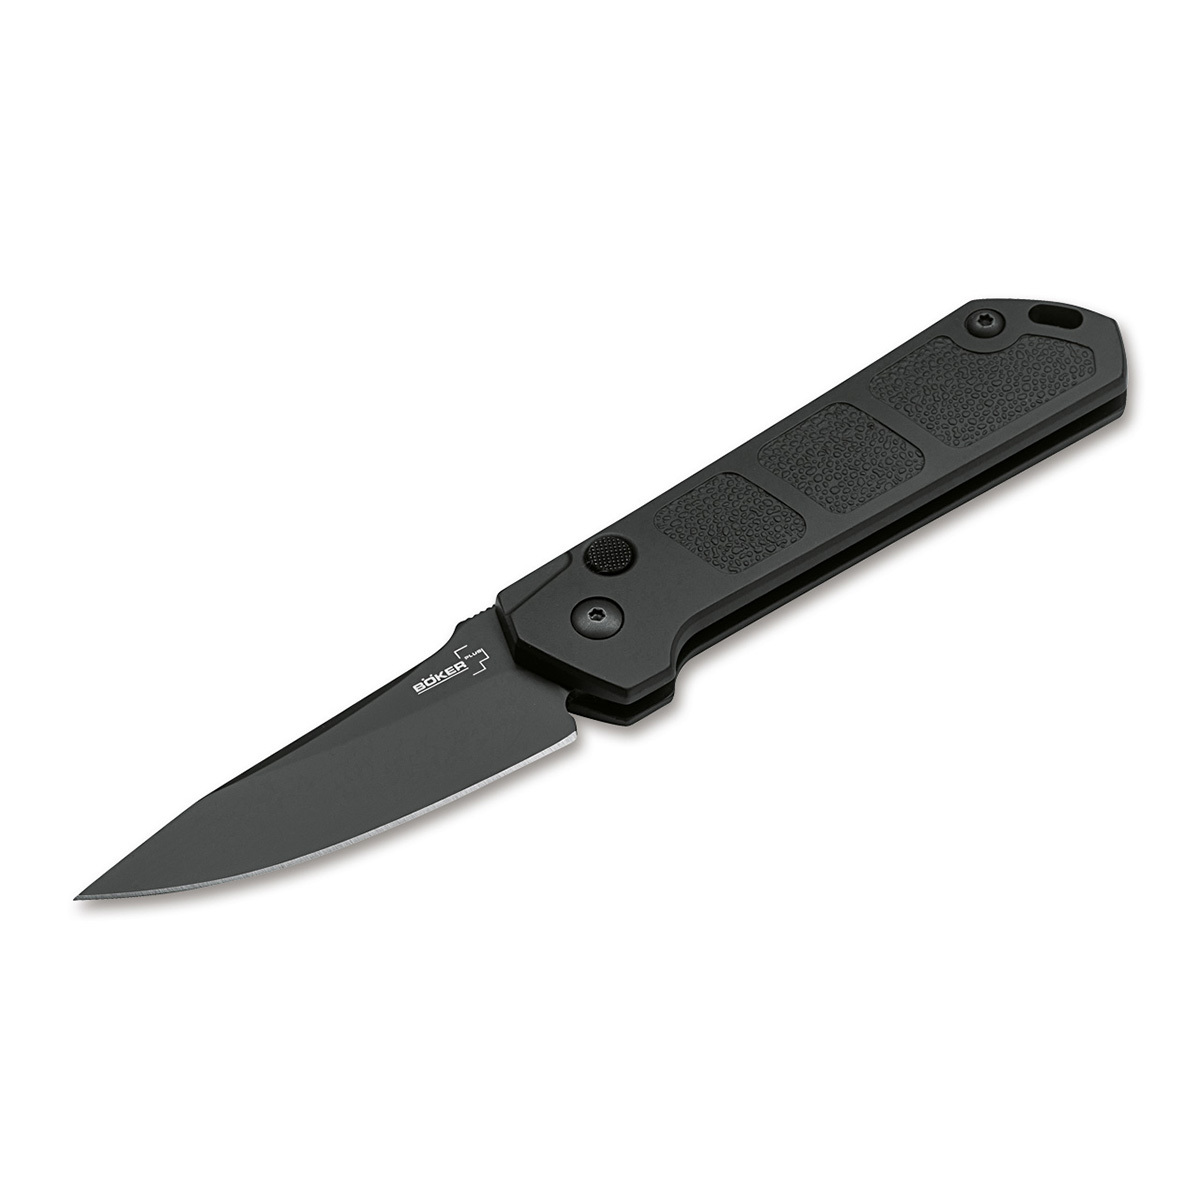 Нож автоматический складной Boker Kihon auto black, сталь AUS8, рукоять алюминий нож складной автоматический ma013 viking nordway